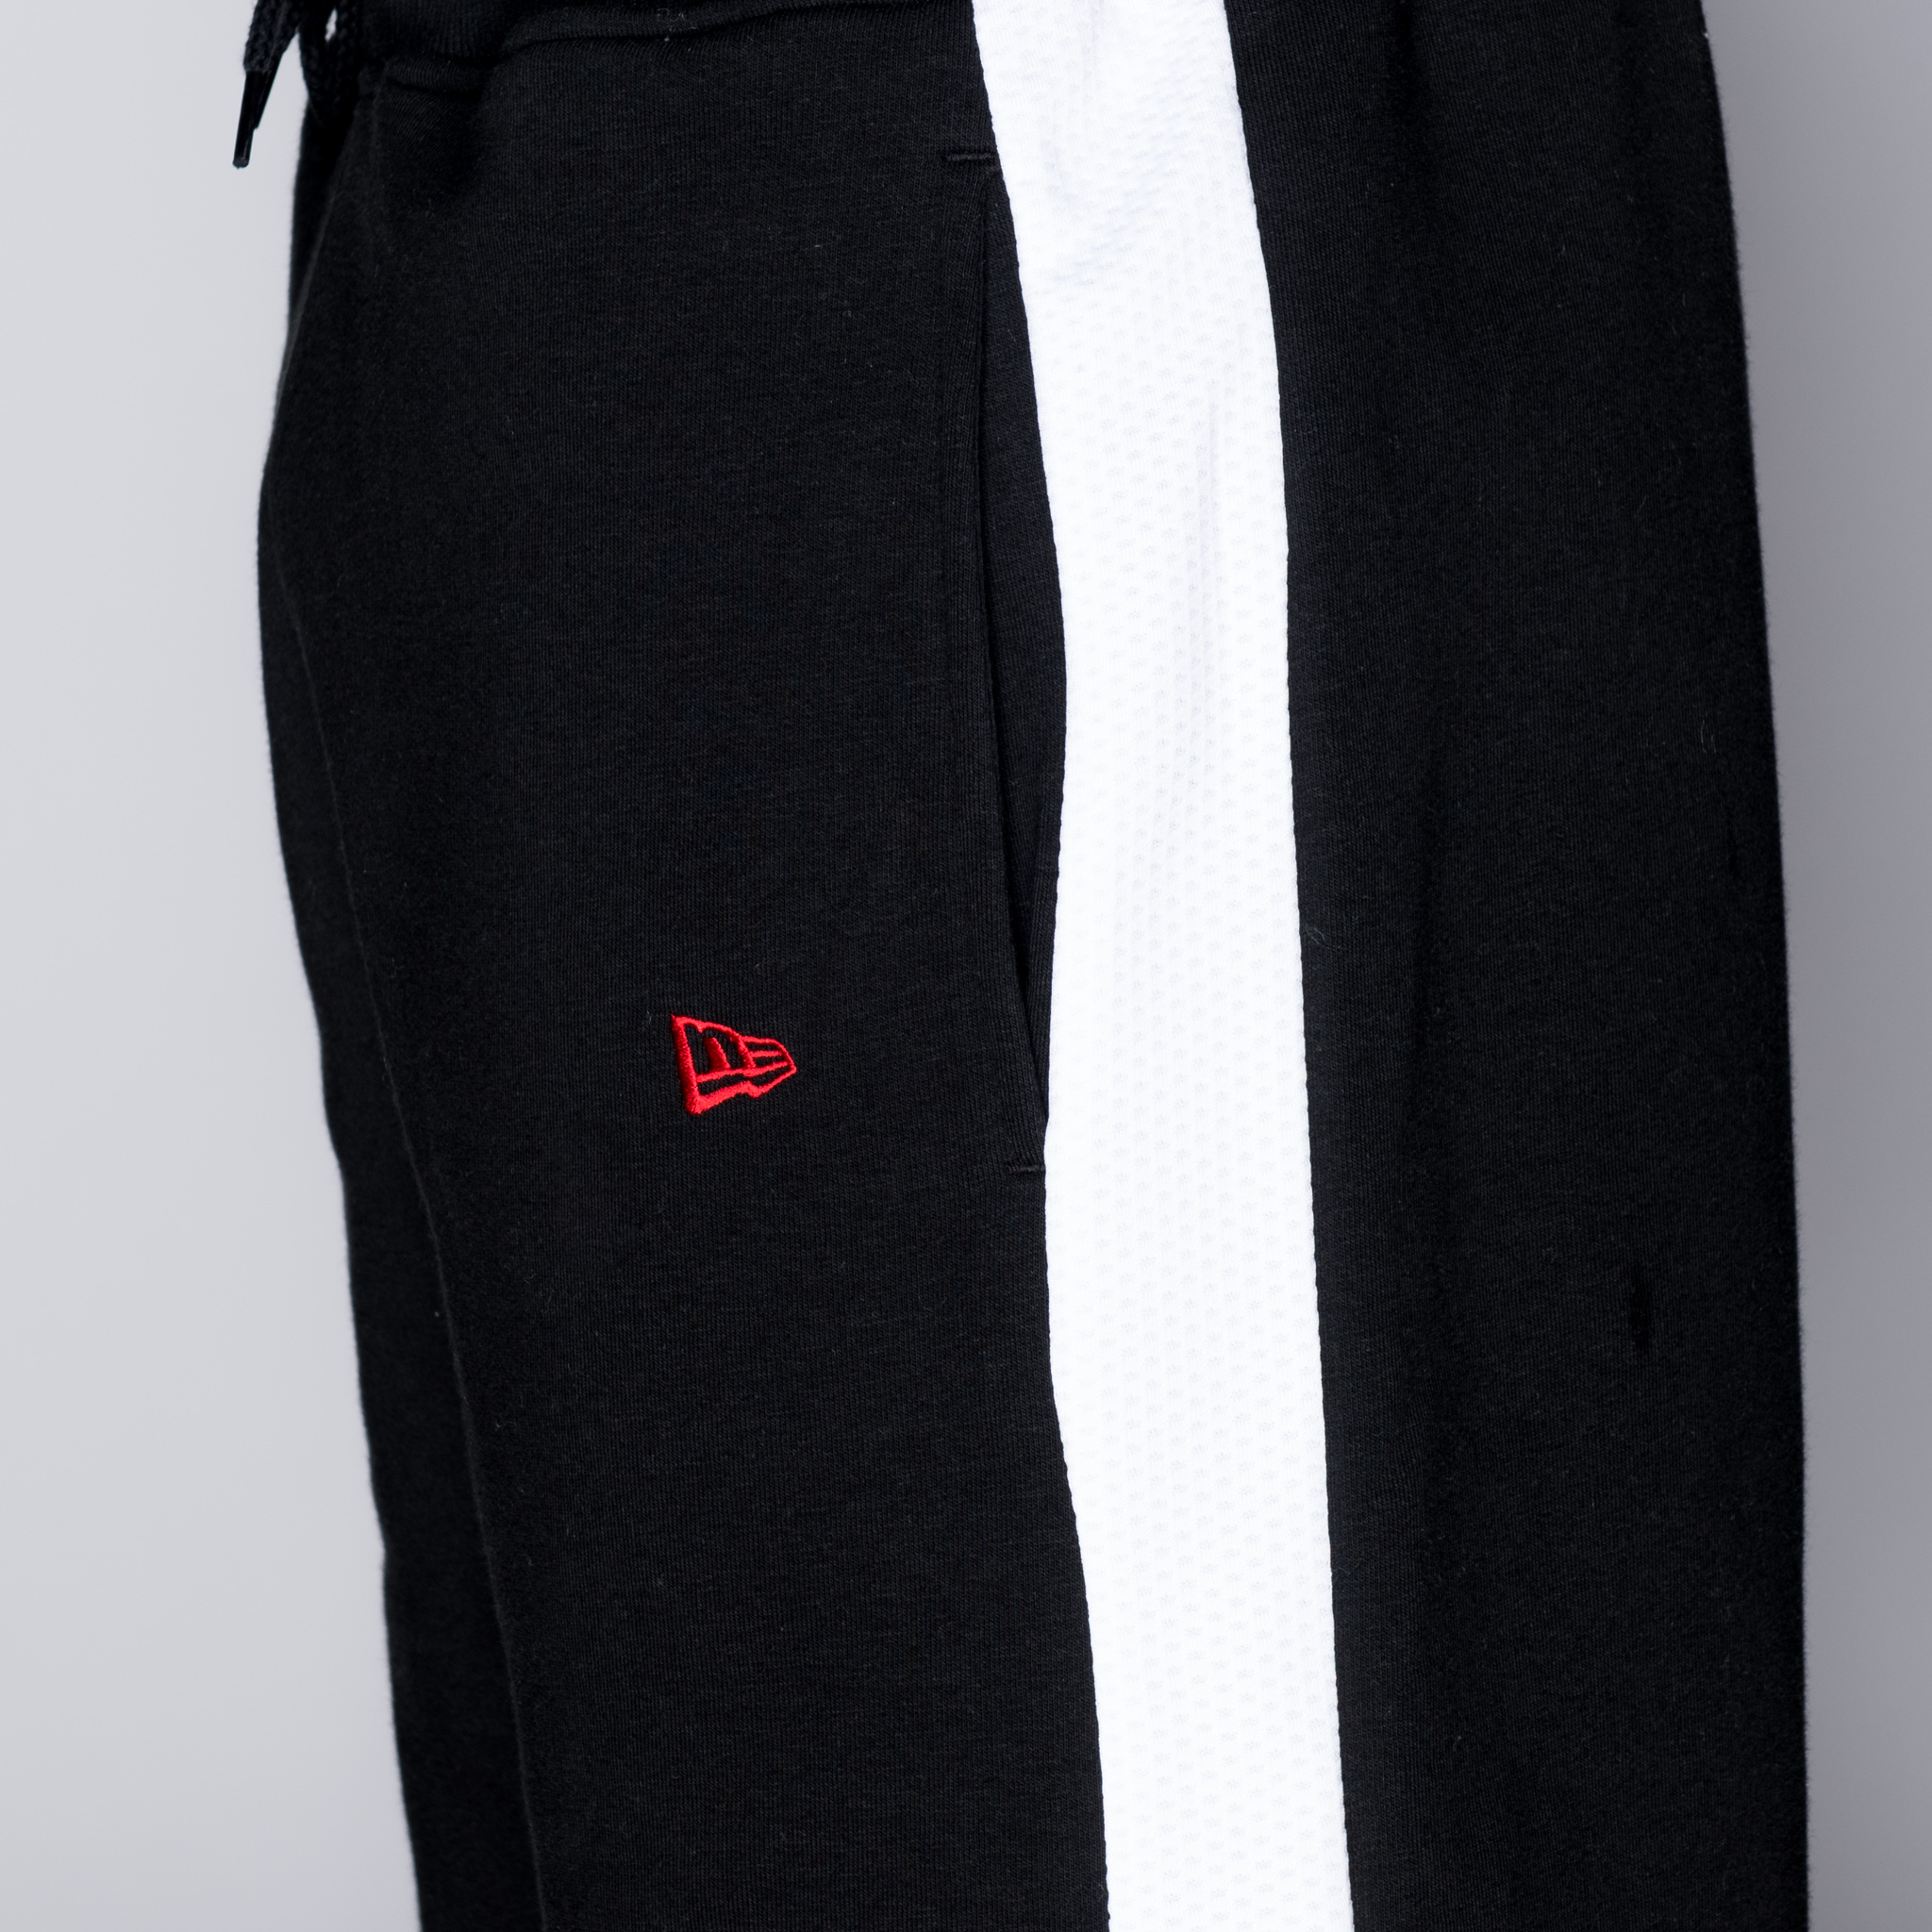 Pantaloncini neri con logo dei Chicago Bulls